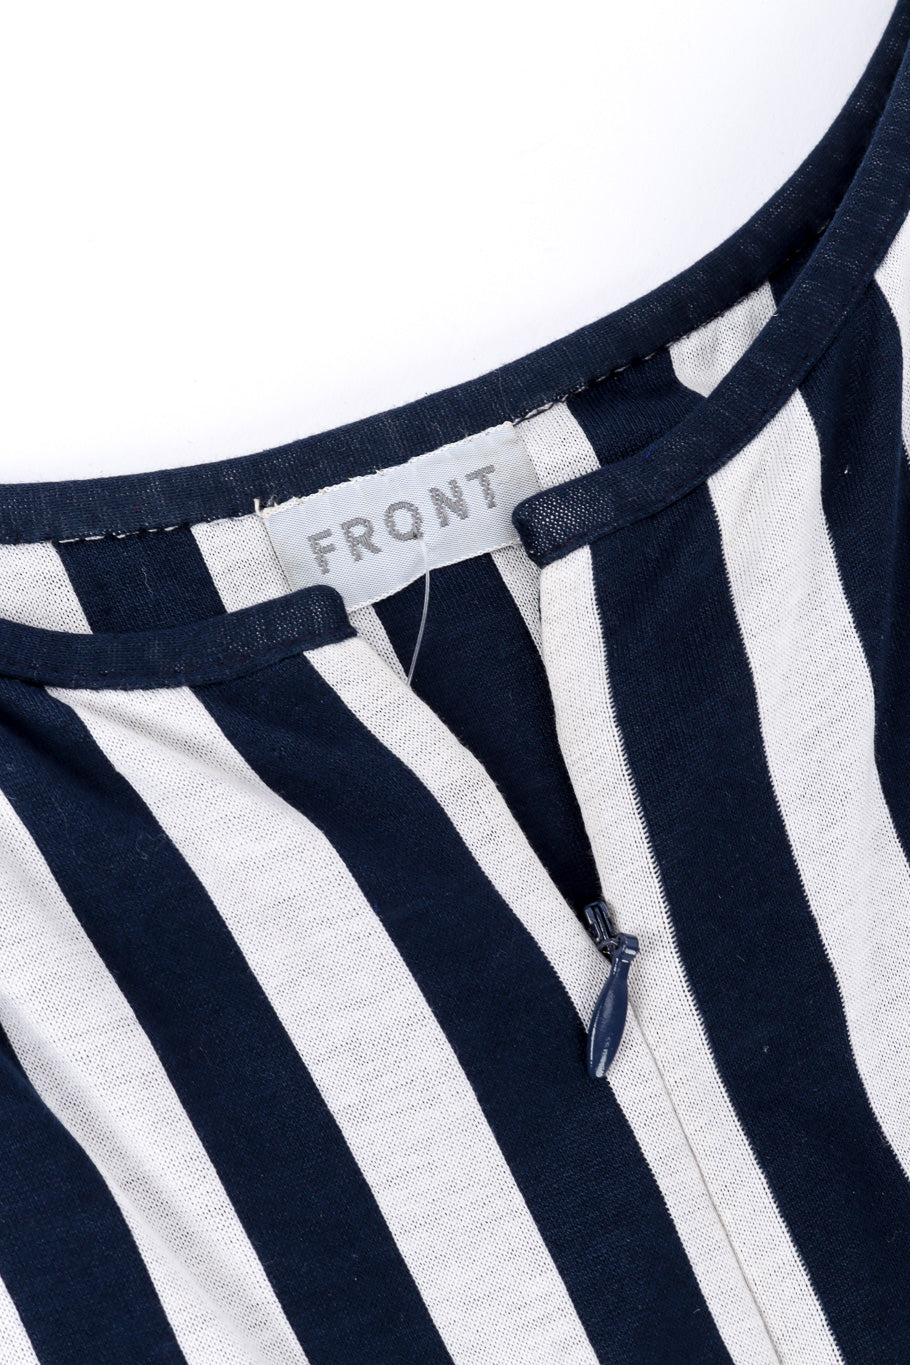 Vintage Geoffrey Beene Striped Jumpsuit zipper closeup closeup @Recessla